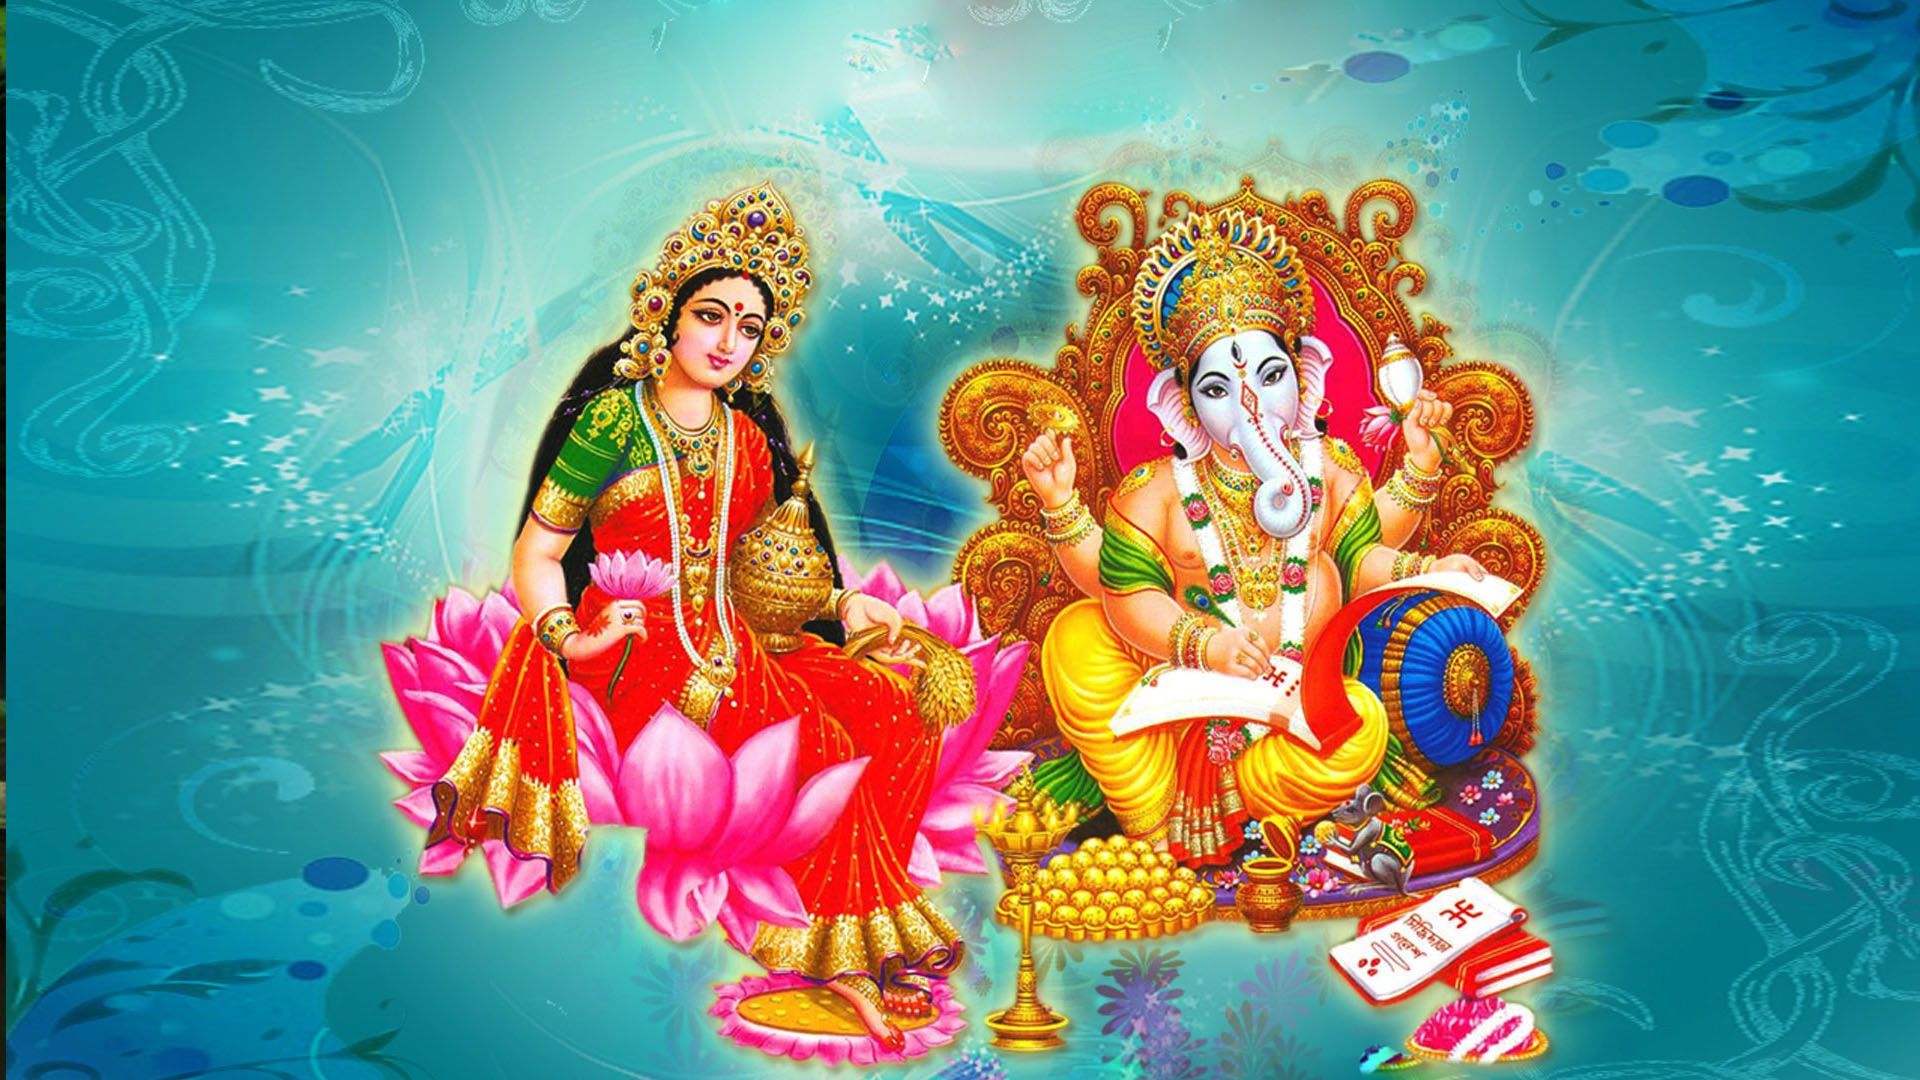 Laxmi Ganesh 3D Image Wallpaper Photo. Goddess Maa Lakshmi